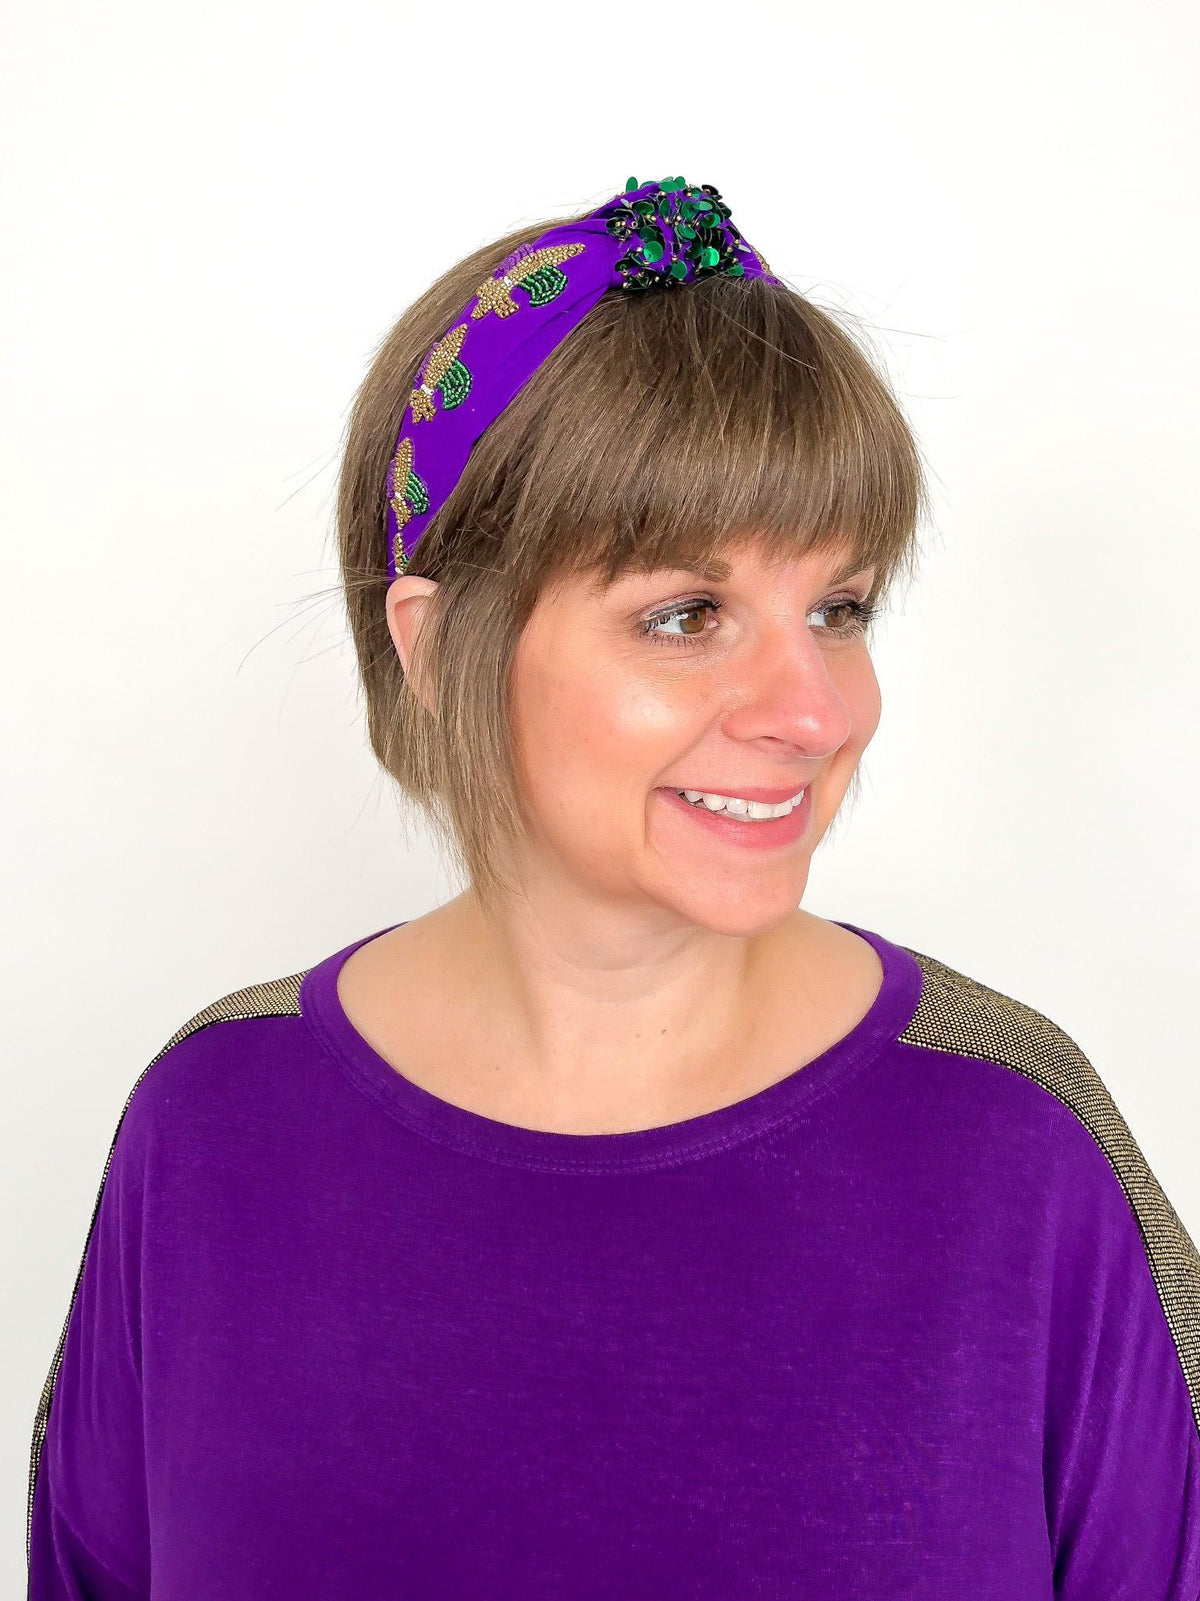 Mardi Gras Fleur de Lis Headband - SLS Wares